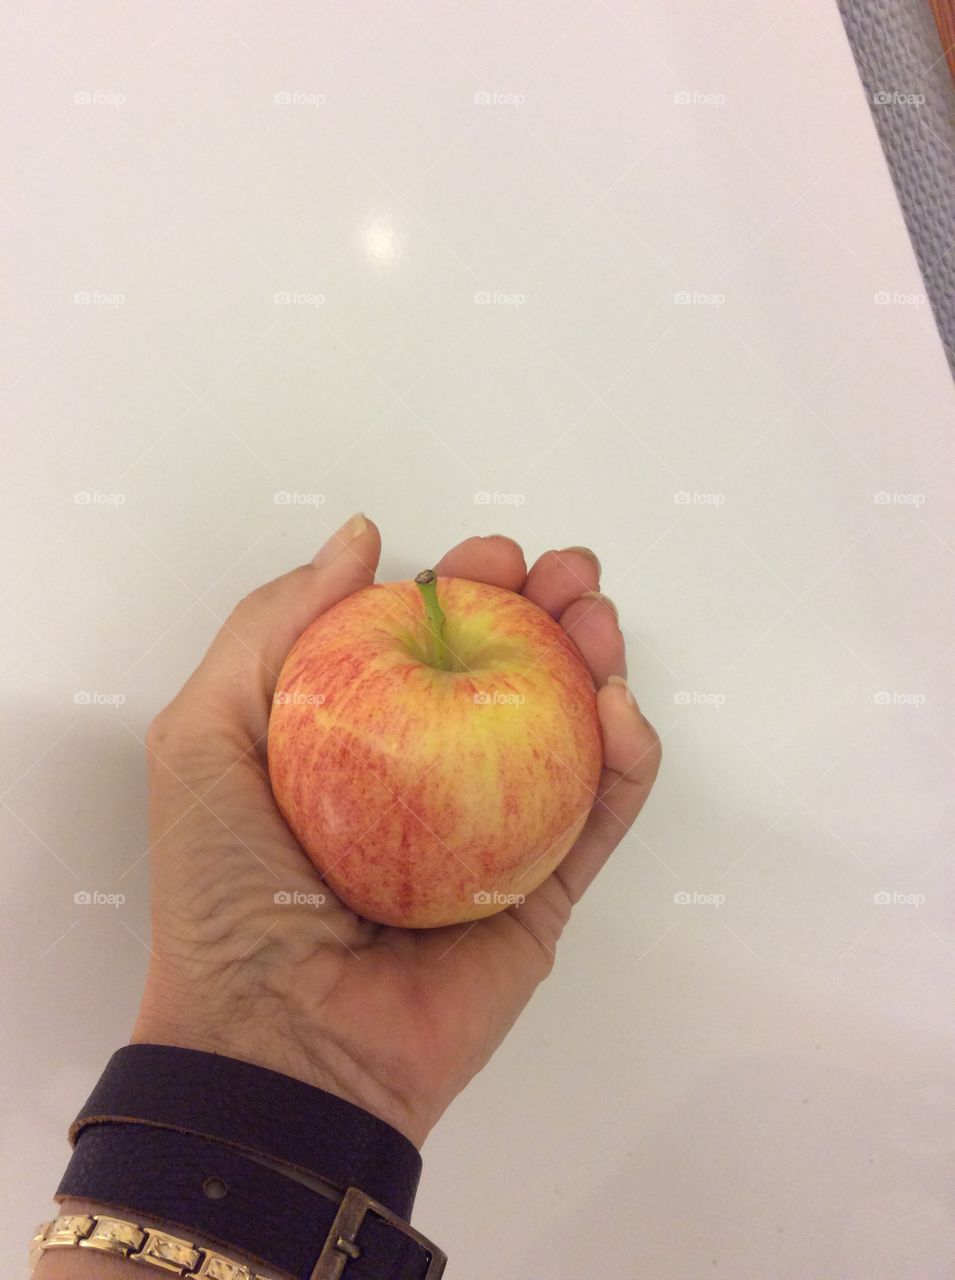 An Apple a day